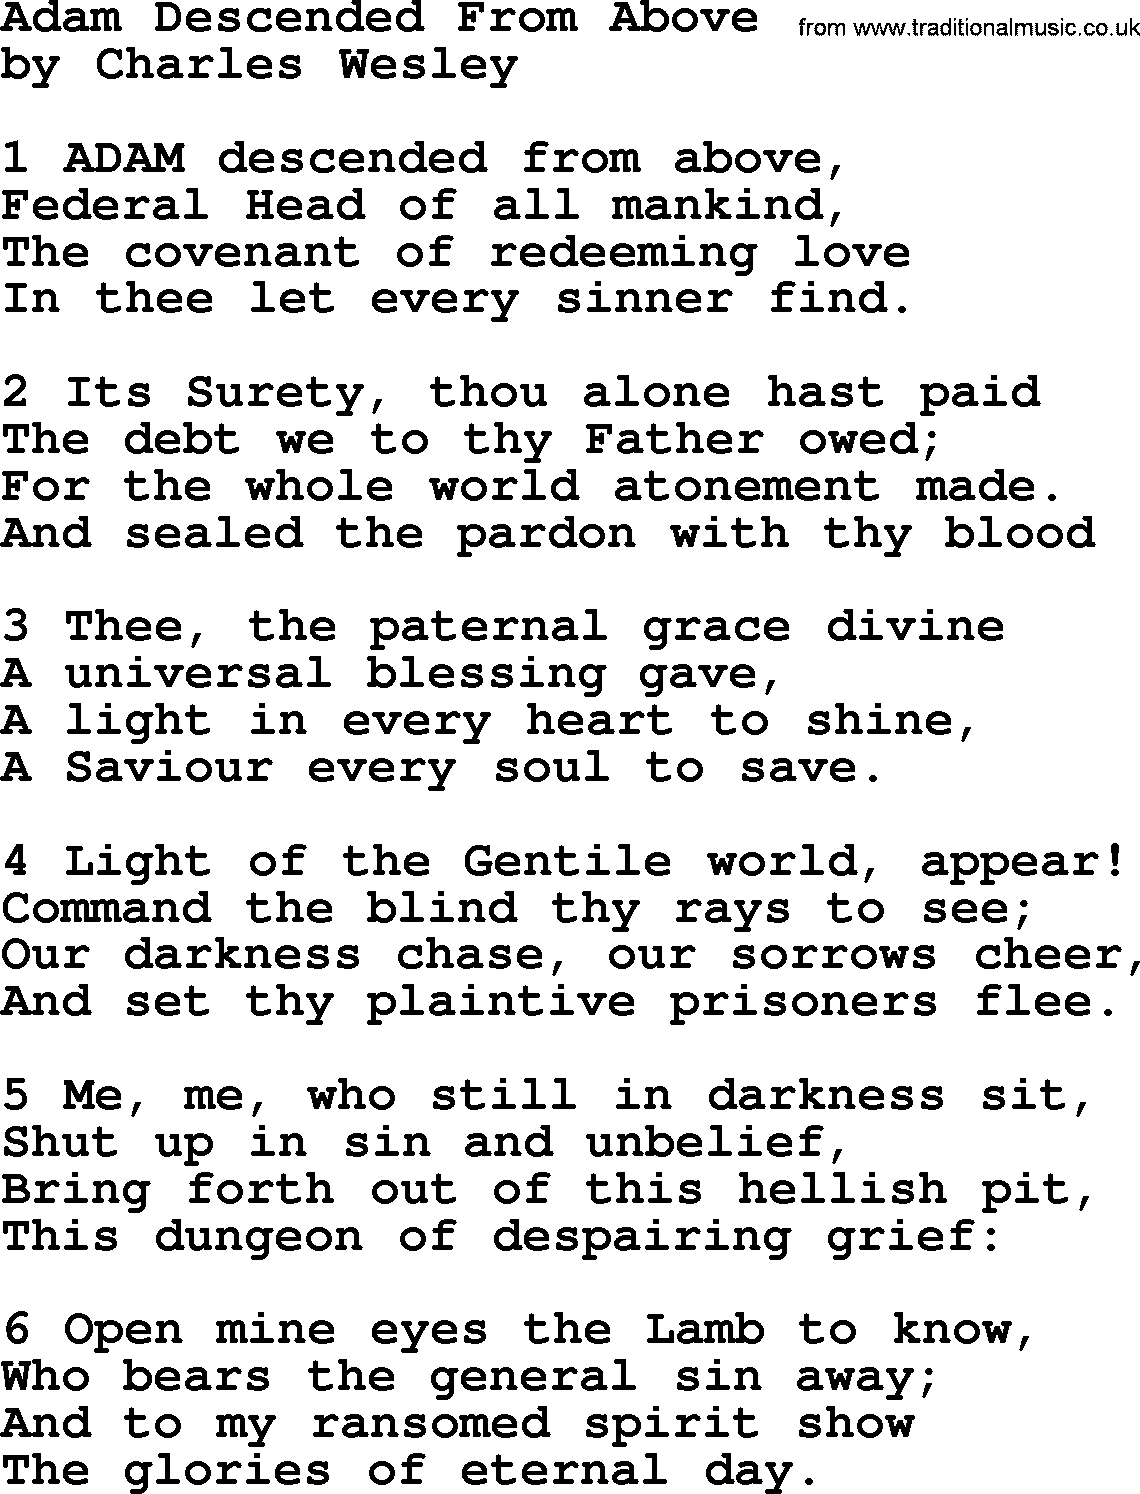 Charles Wesley hymn: Adam Descended From Above, lyrics